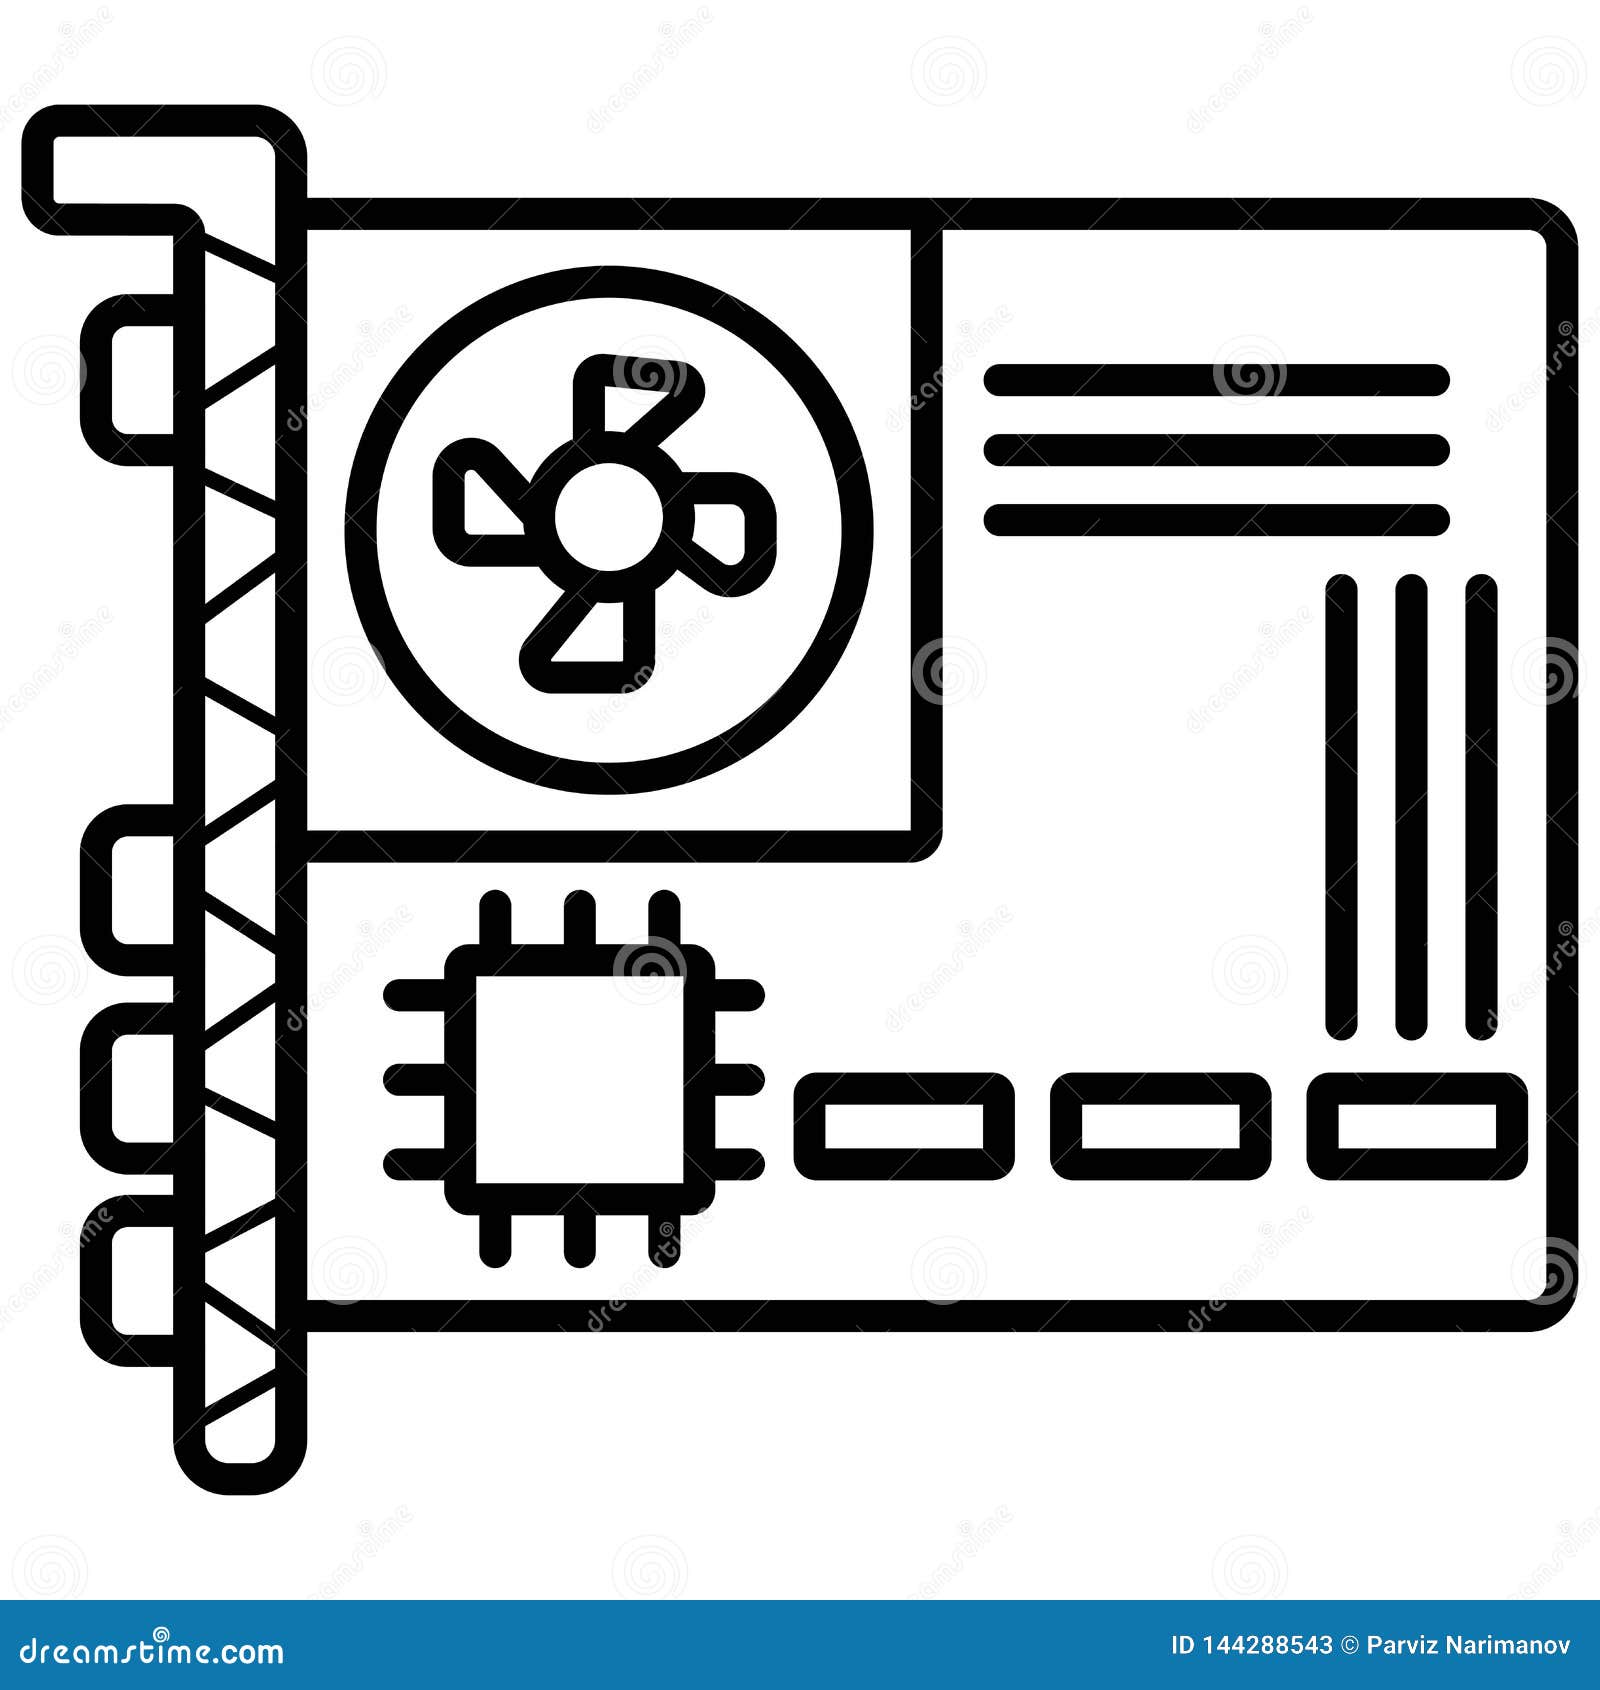 Download Motherboard Icon Vector Illustration | CartoonDealer.com ...